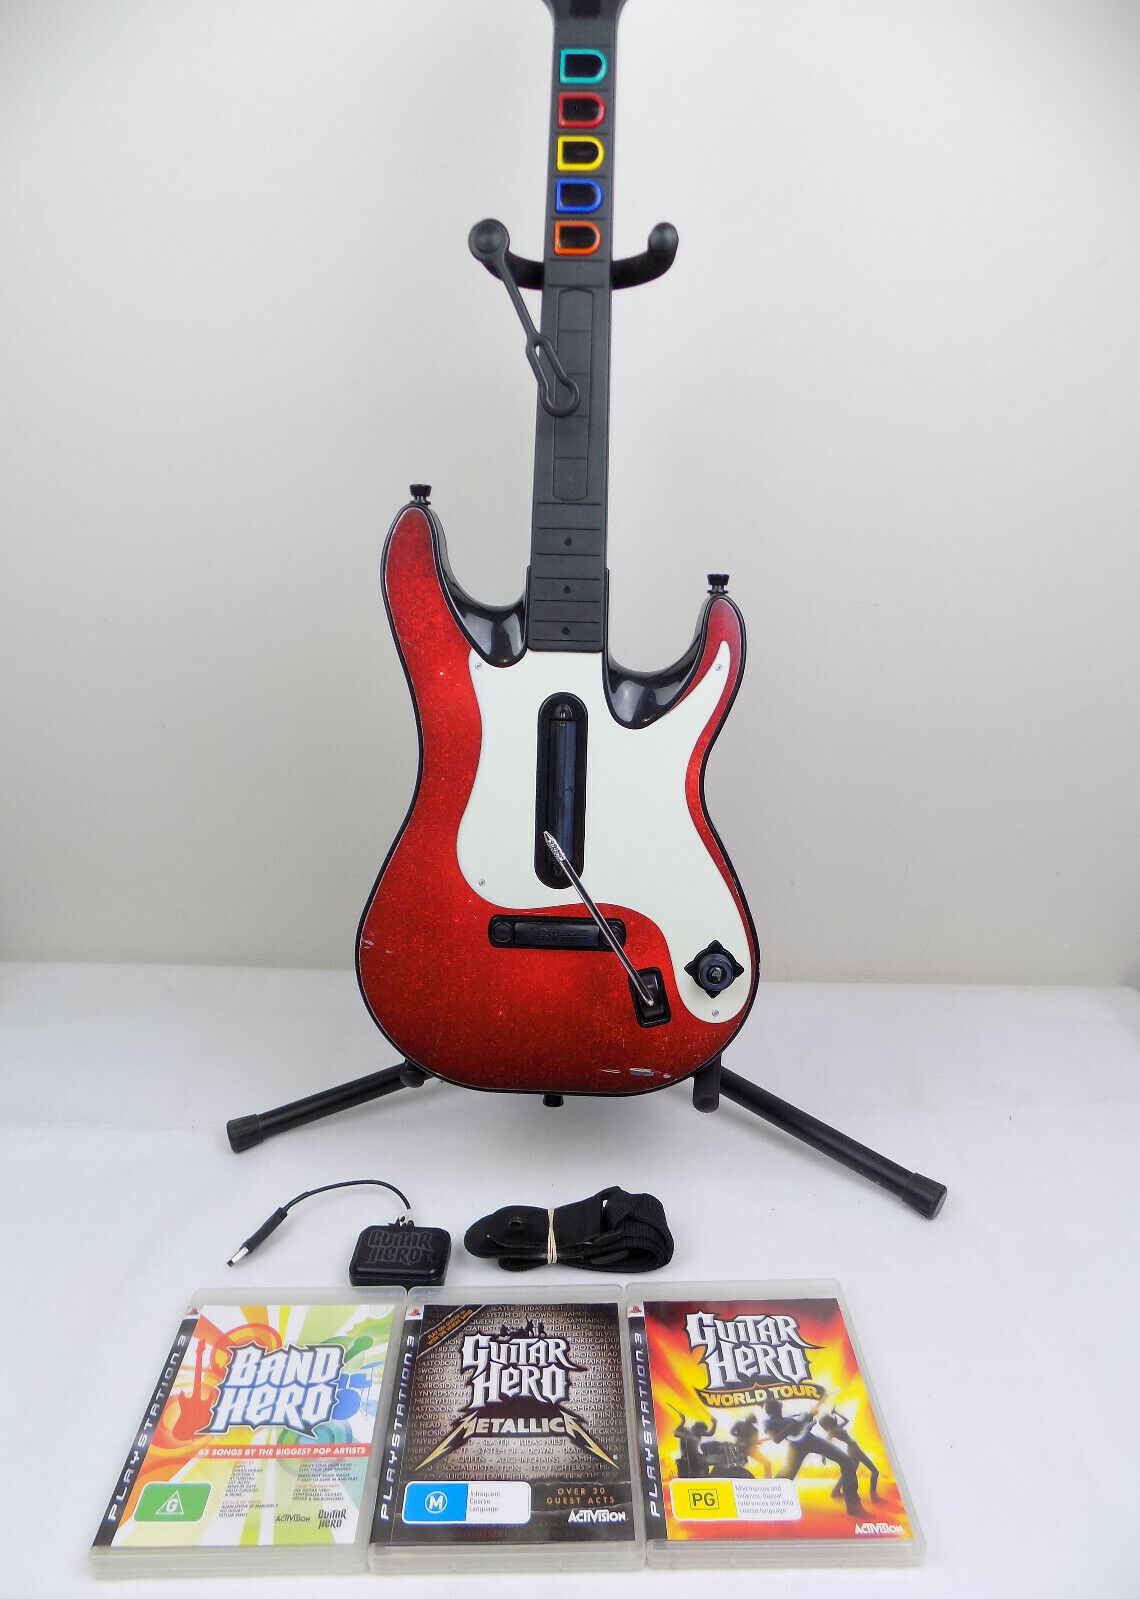 Costa Respectivamente Ashley Furman Playstation 3 Ps3 PC Wireless Guitar Hero Controller 3x Games + Dongle  Metallica - Starboard Games